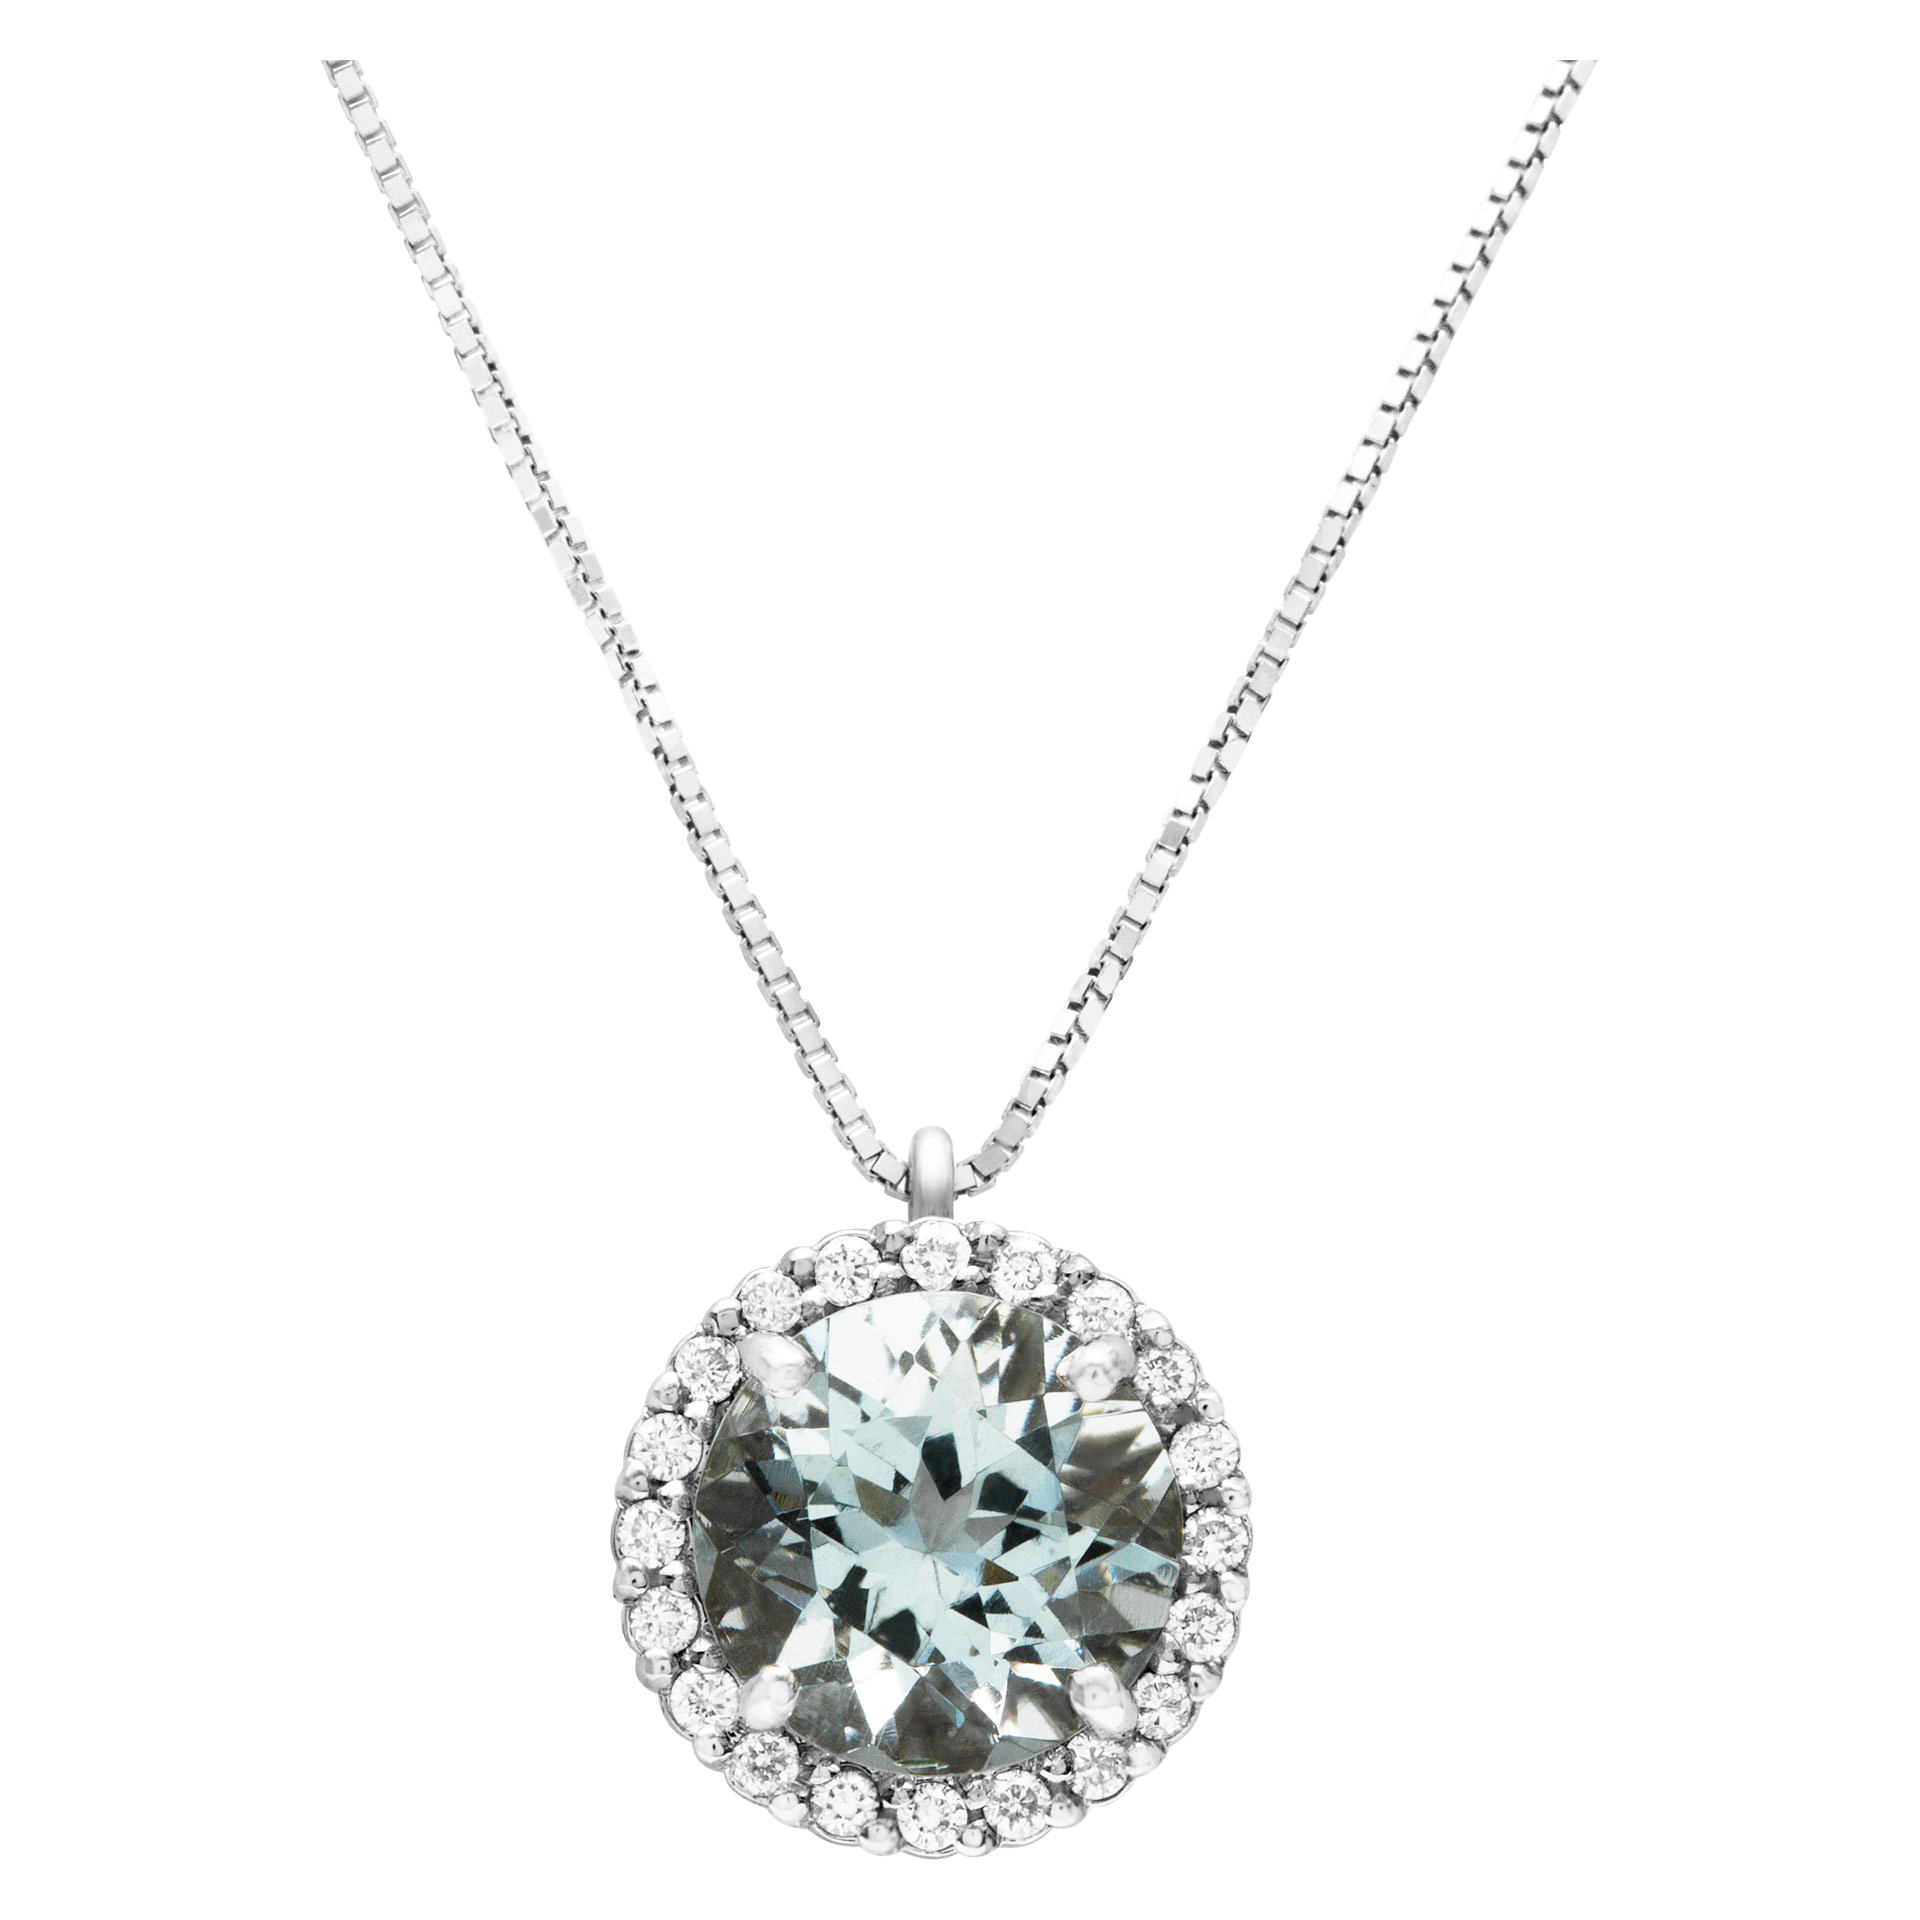 Round Aquamarine pendant with diamond accents image 1